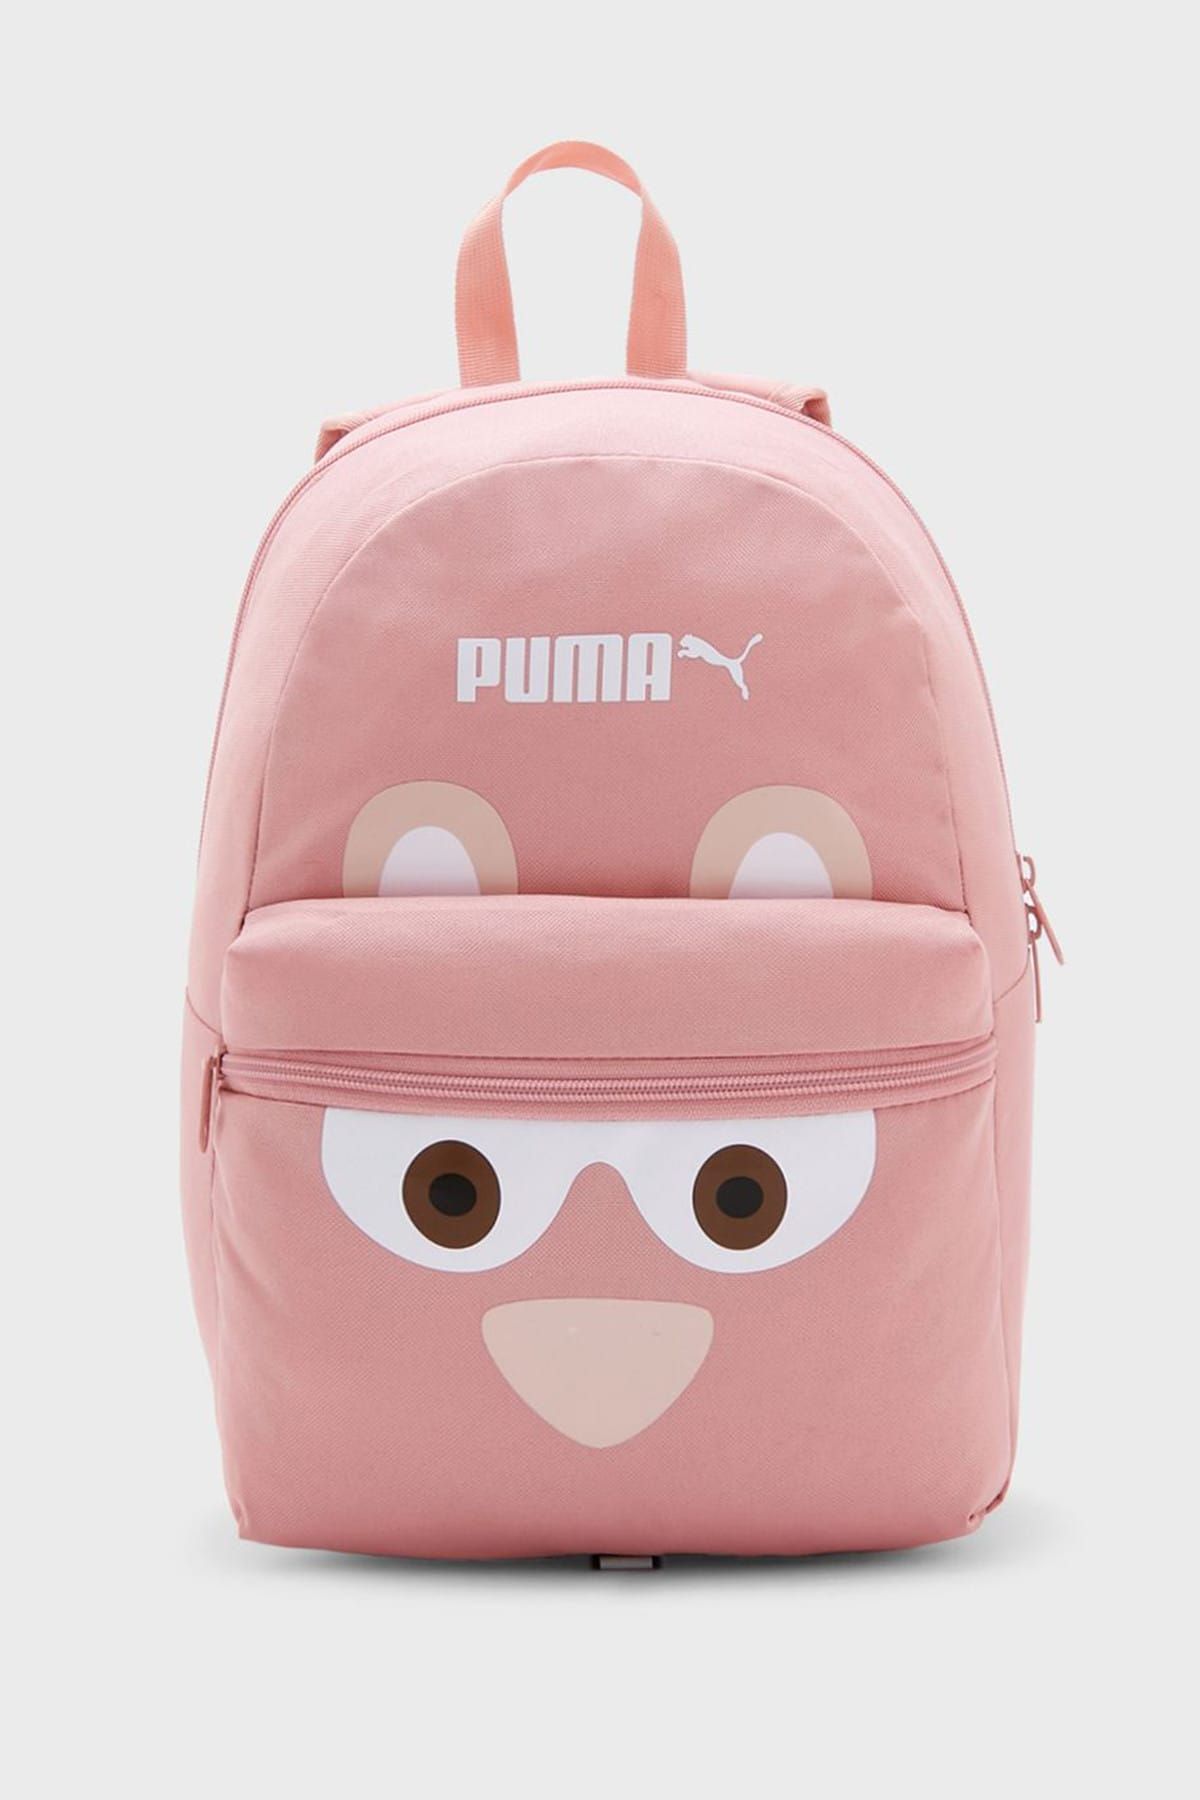 Puma Pembe Kız Çocuk Monster Backpack Bridal Rose Sırt Çantası